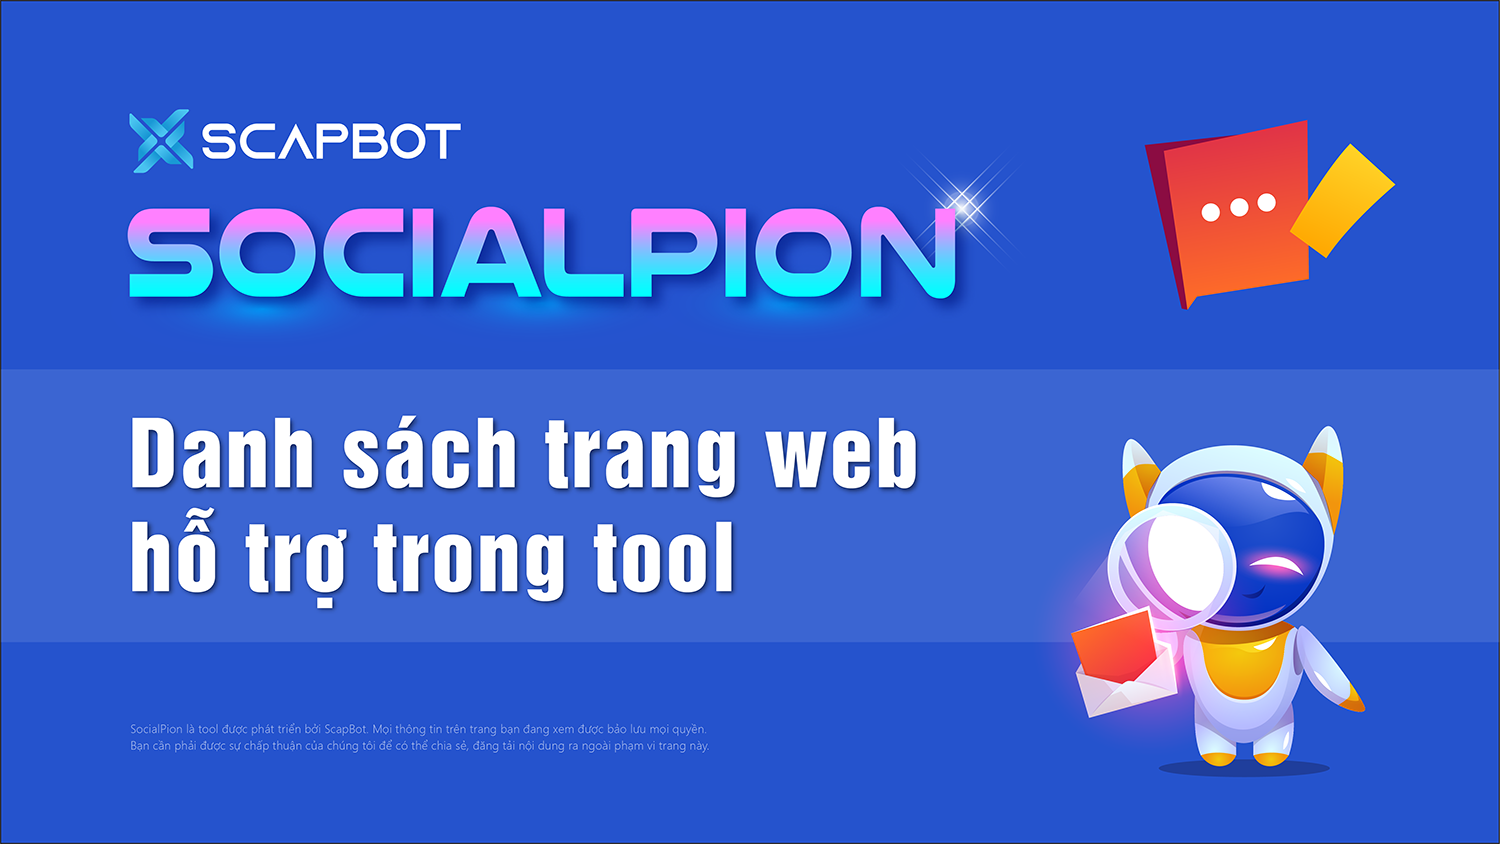 socialpion-danh-sach-trang-web-ho-tro-trong-tool